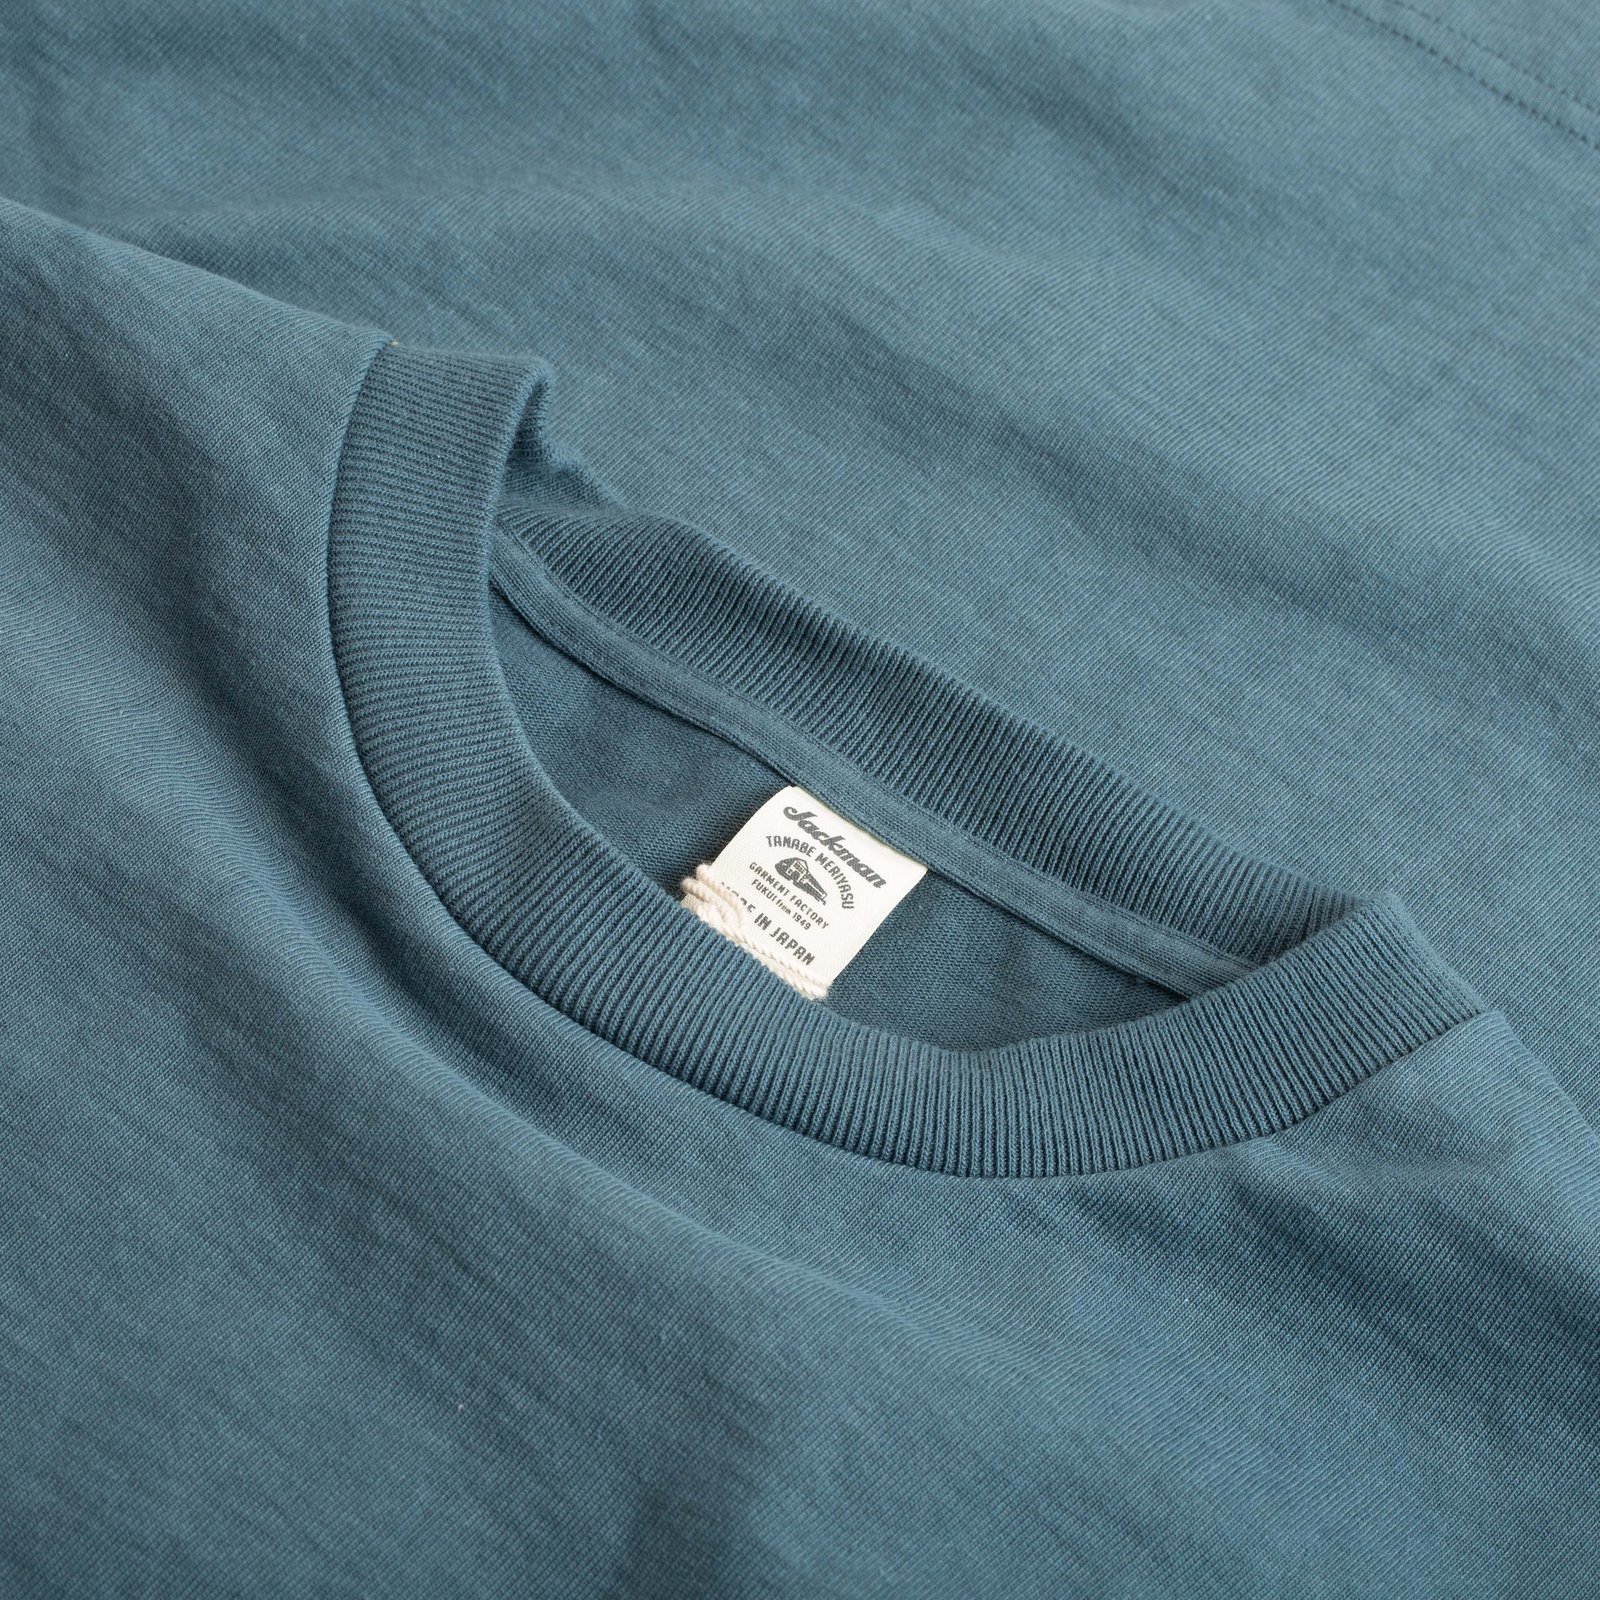 Dotsume L/S T-Shirt Dark Turquoise